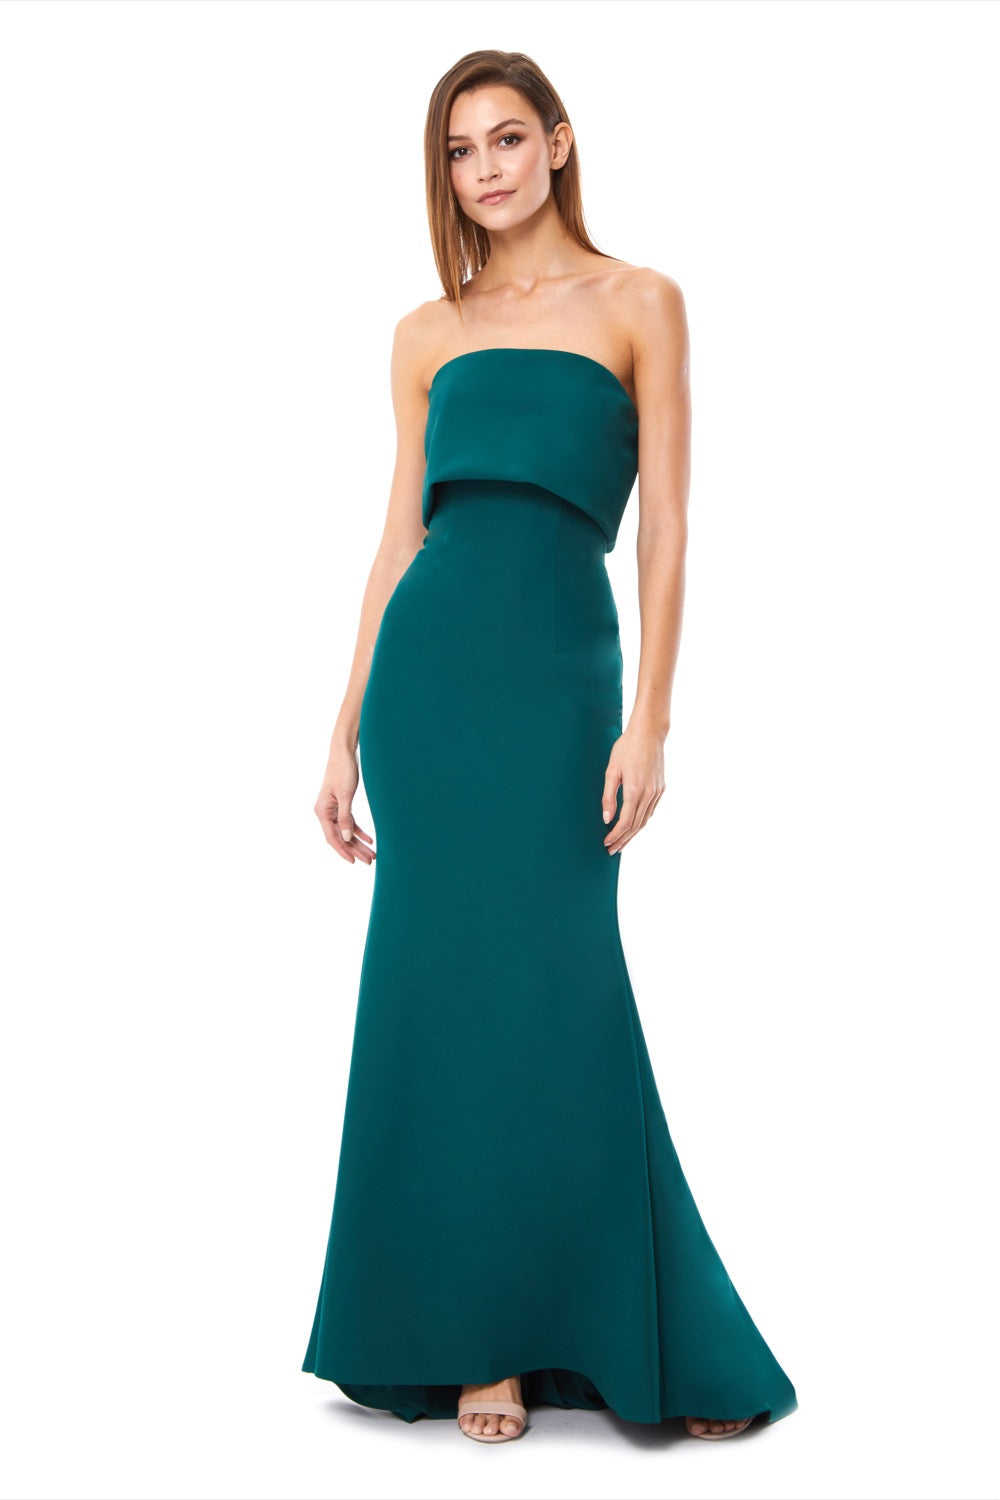 Blaze Strapless Maxi Dress With Overlay, UK 16 / US 12 / EU 44 / Dark Green